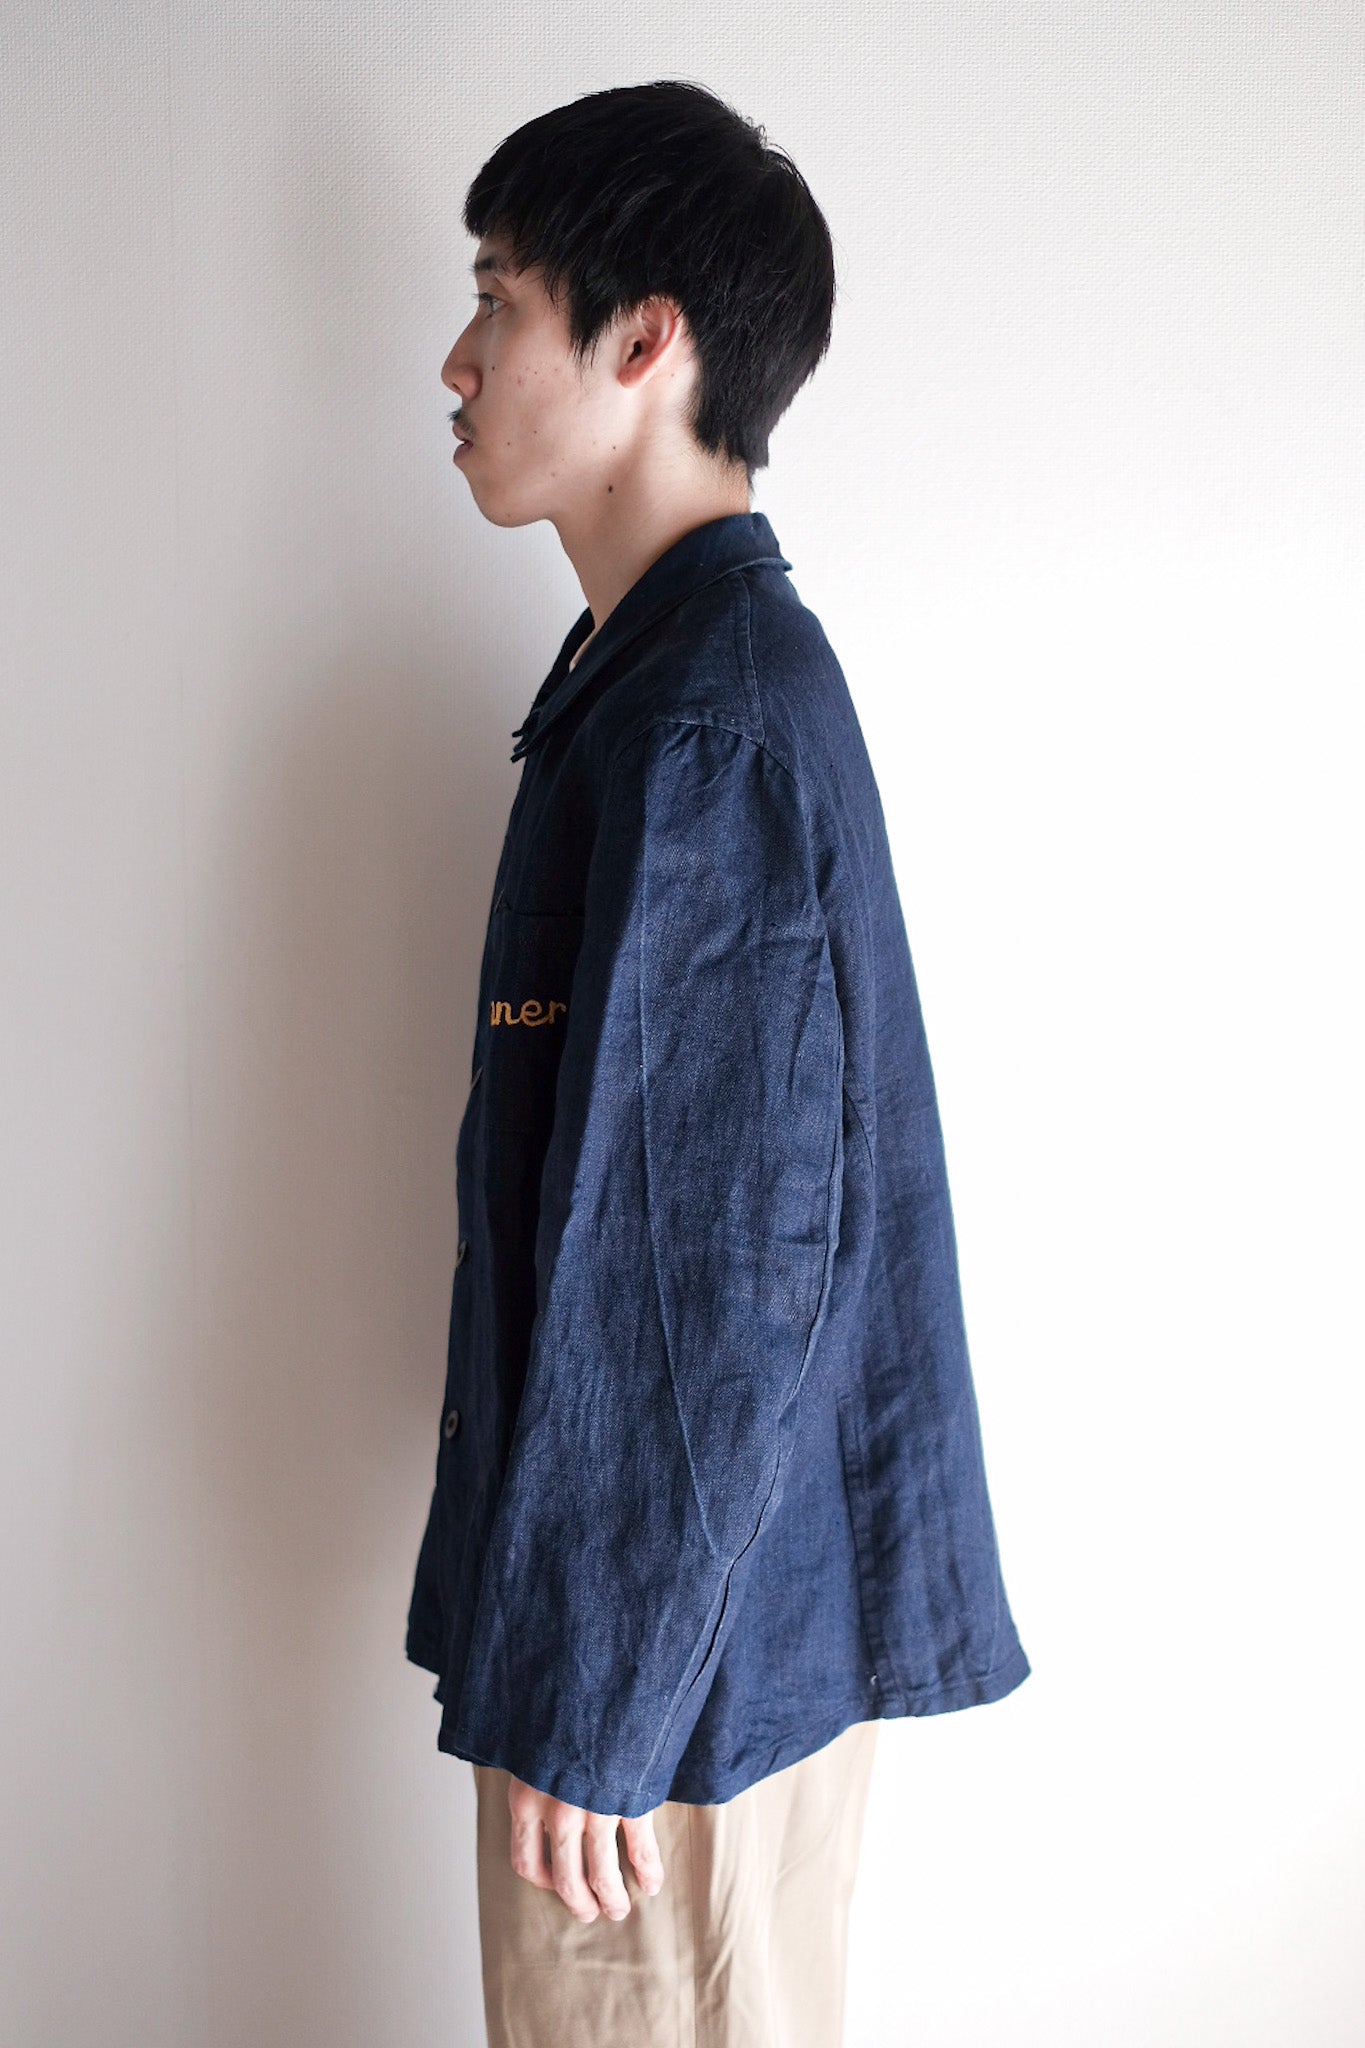 [~ 40's] French Vintage Indigo HBT Linen Work Jacket